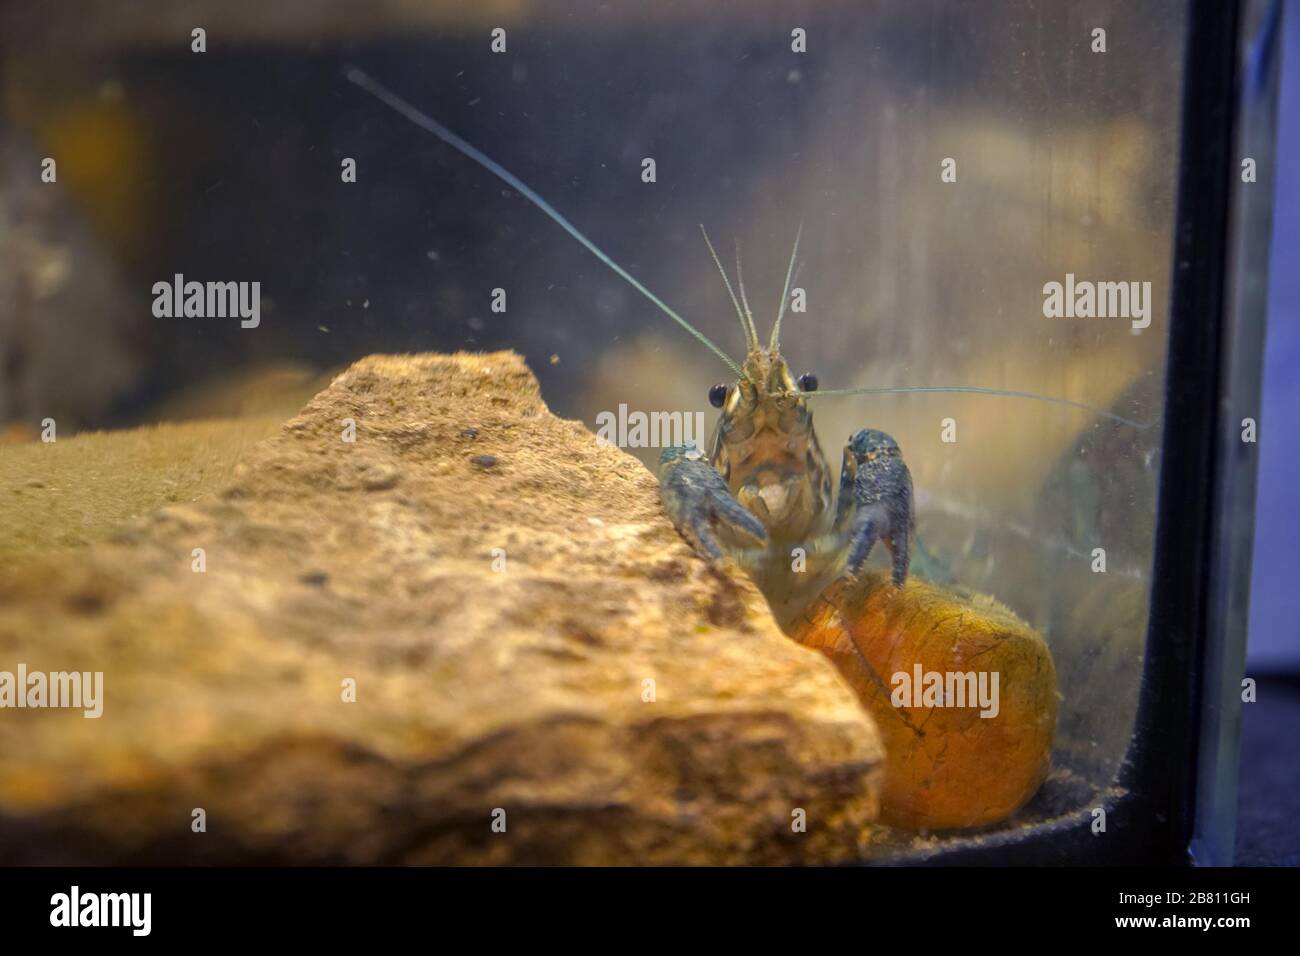 Marble crayfish sitting at a stone in an aquarium. Procarambus virginalis. Selective focus Stock Photo